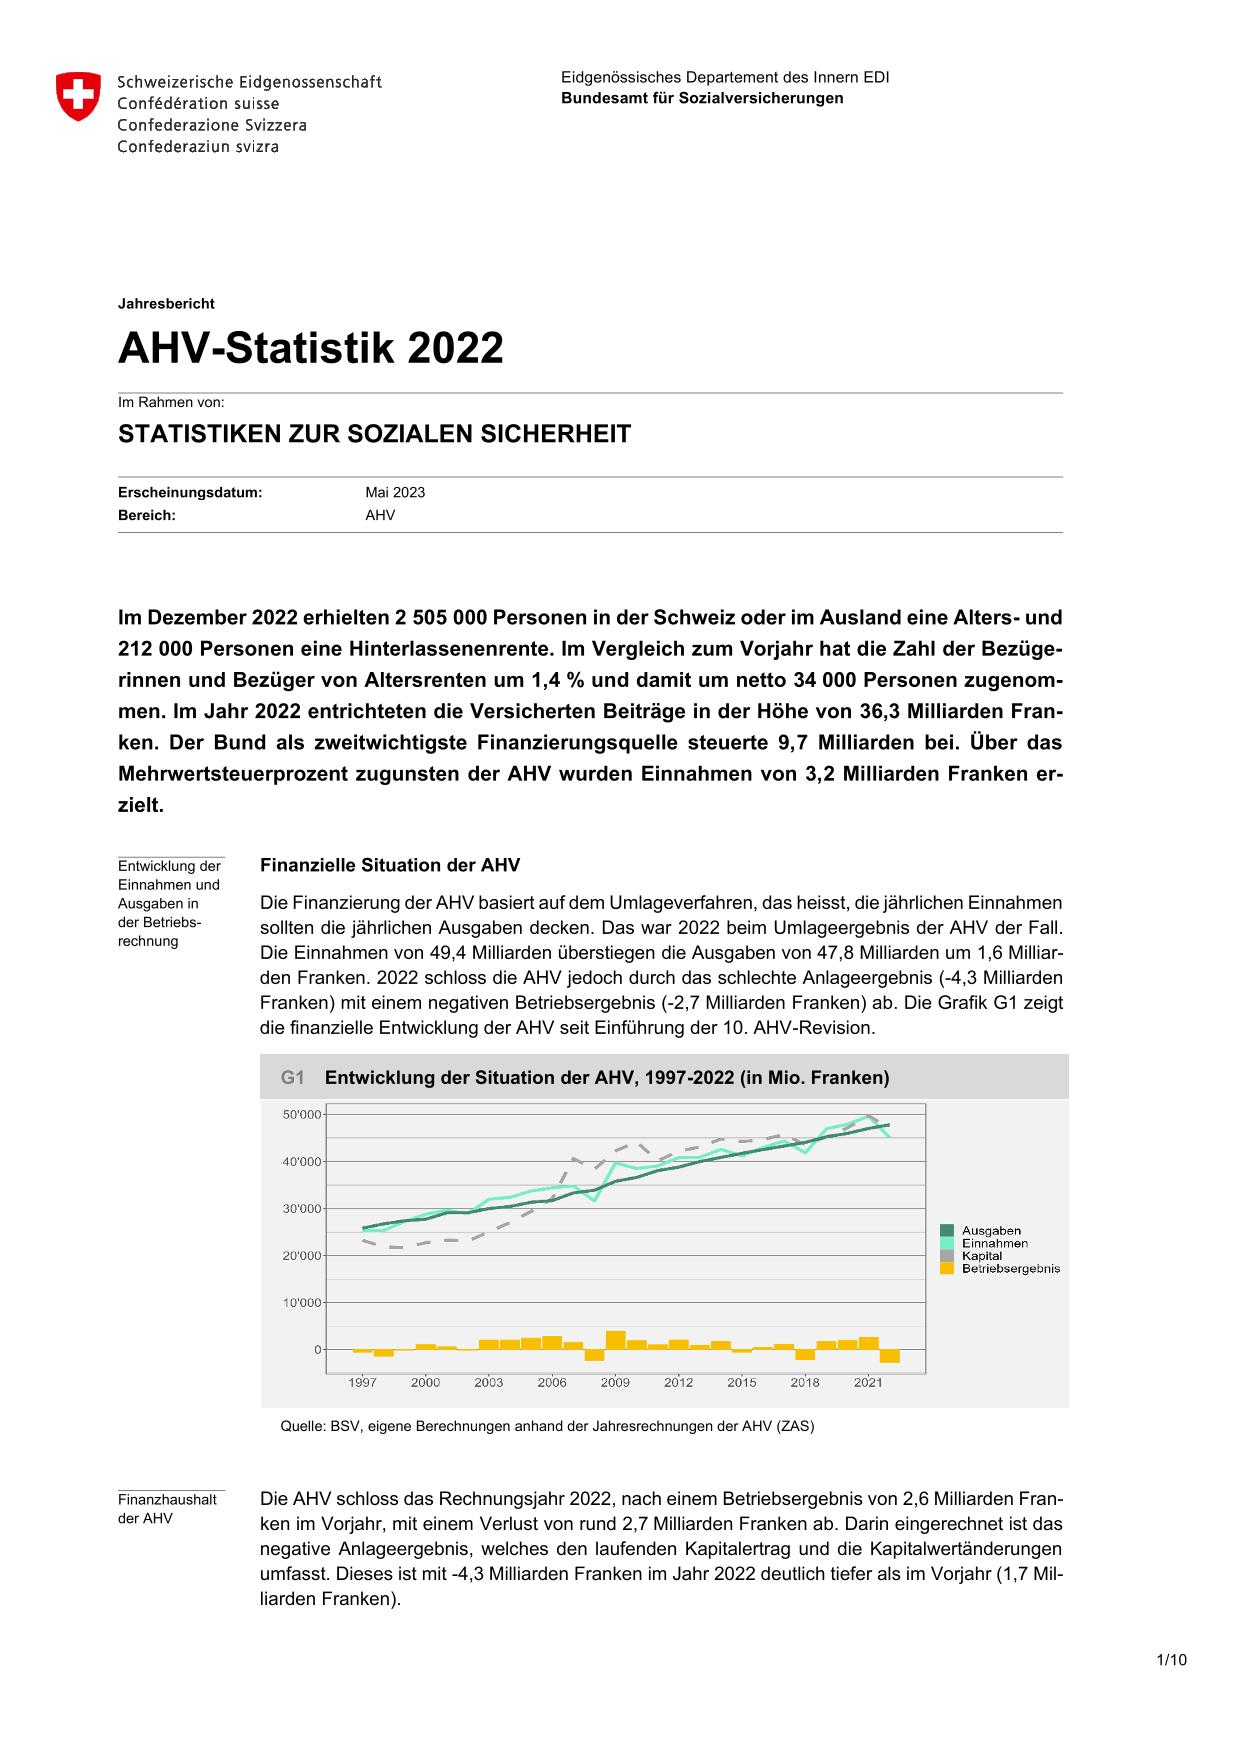 AHV-Statistik_2022-01.jpg